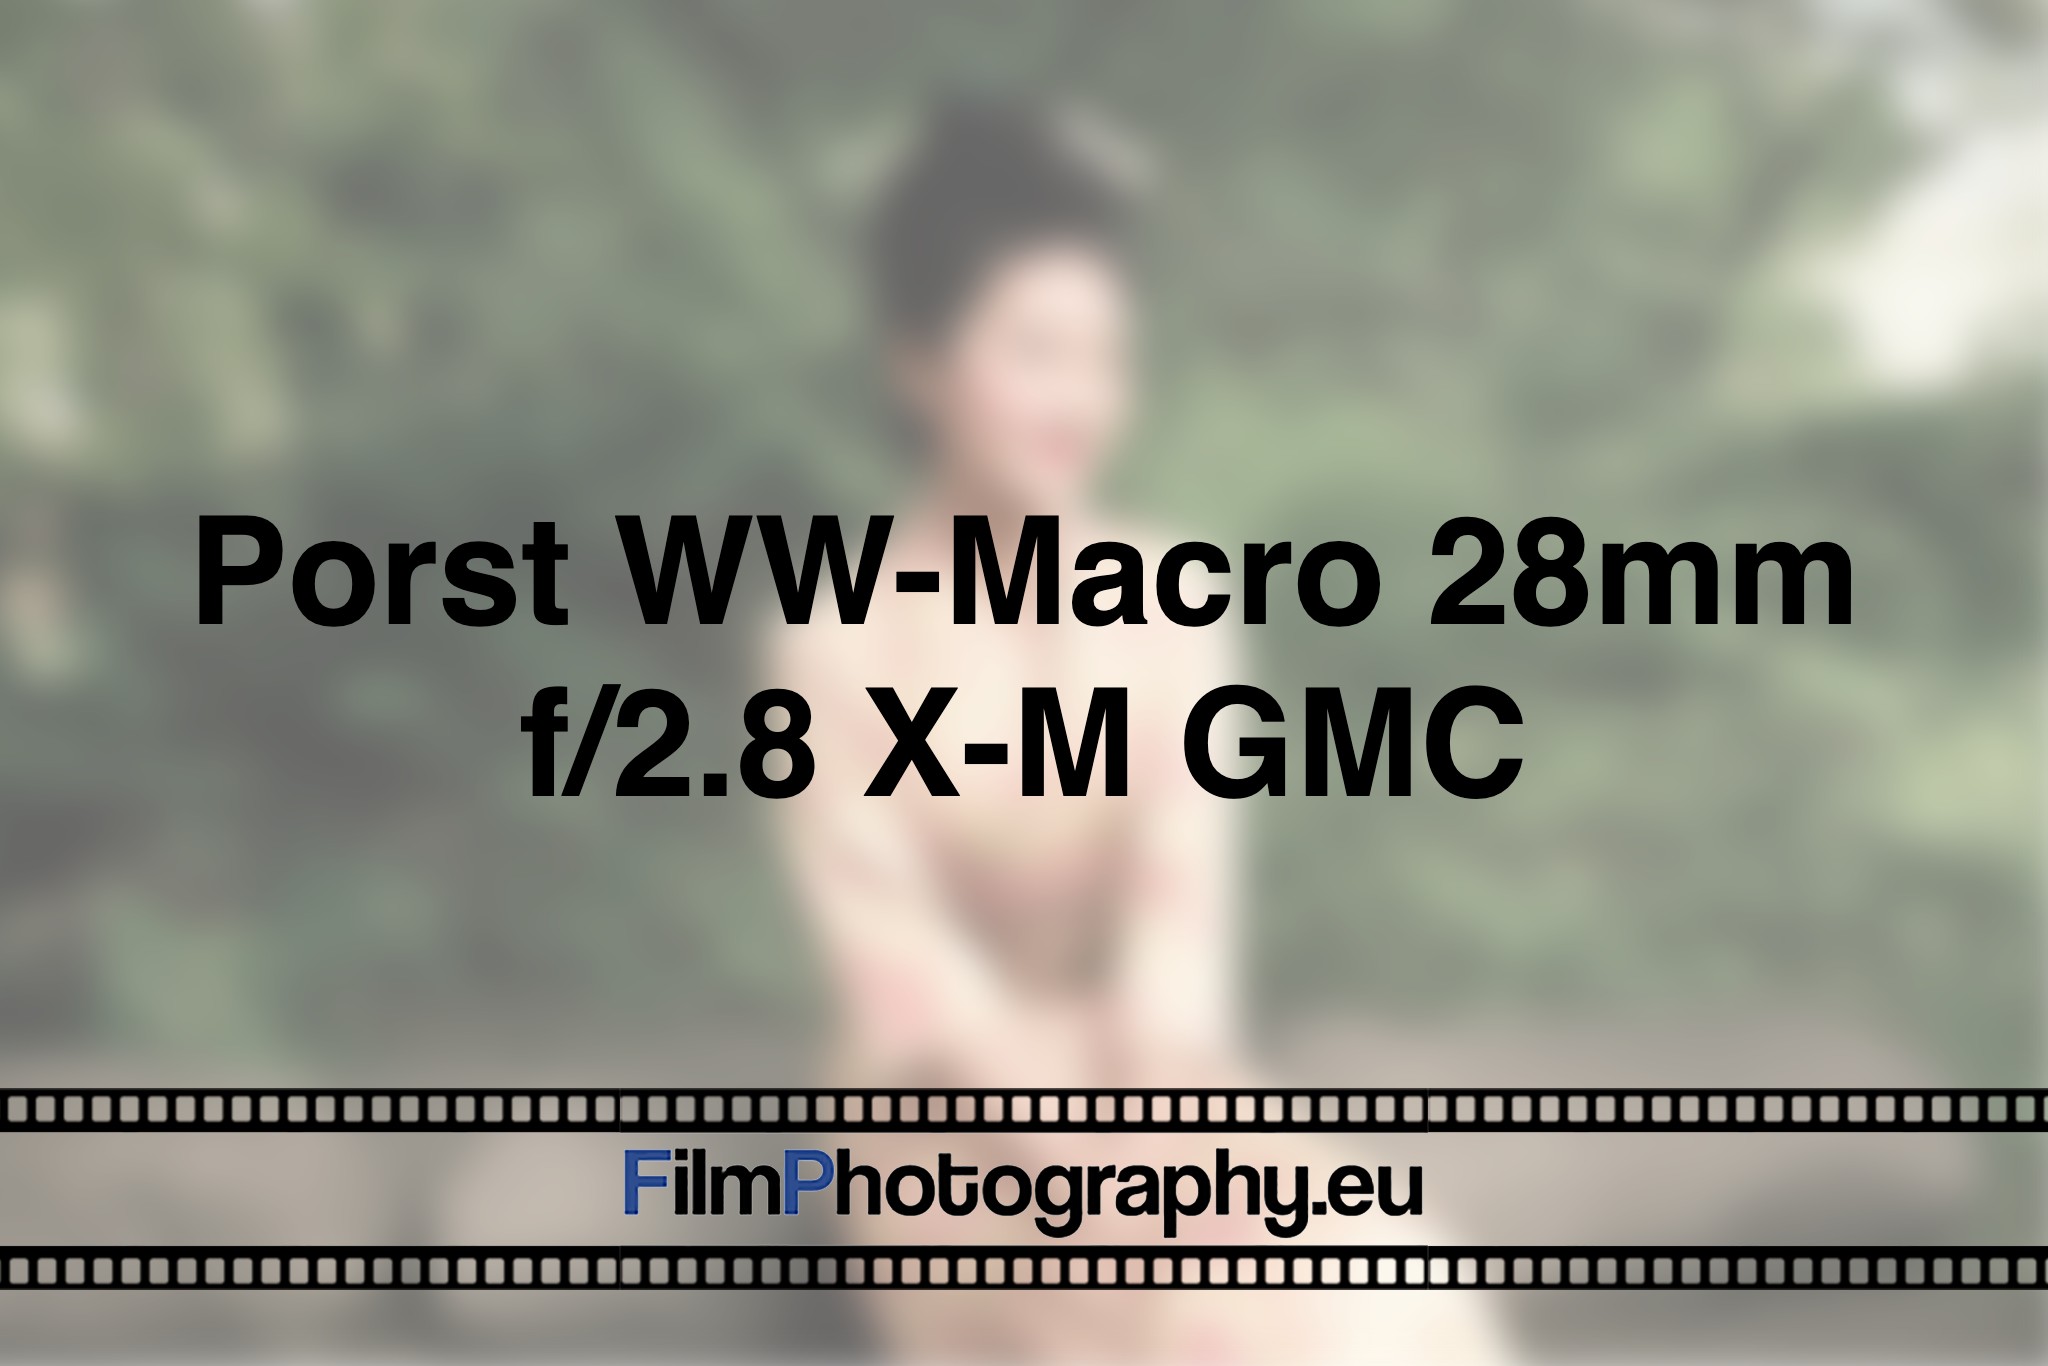 porst-ww-macro-28mm-f-2-8-x-m-gmc-photo-bnv